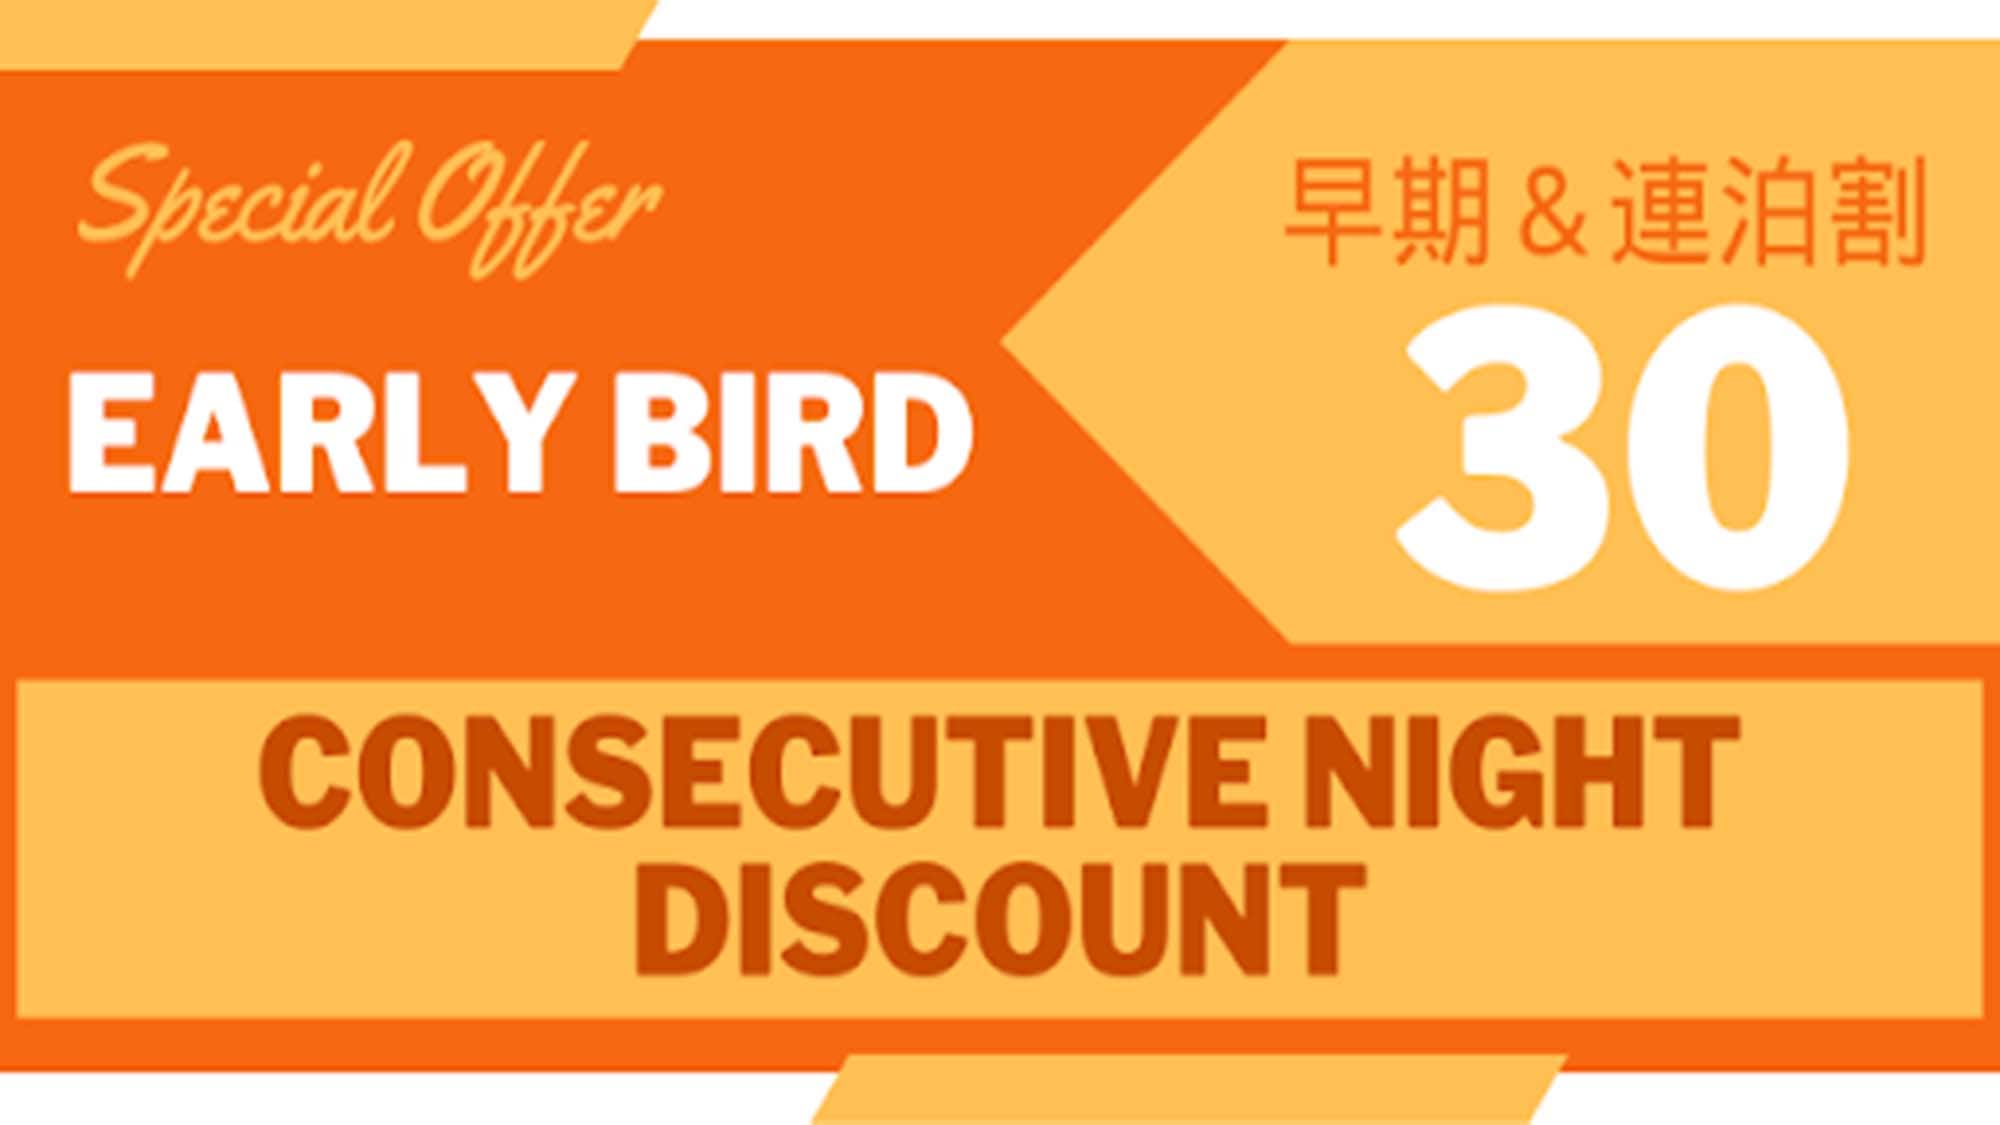 Early bird discount 30+ consecutive nights